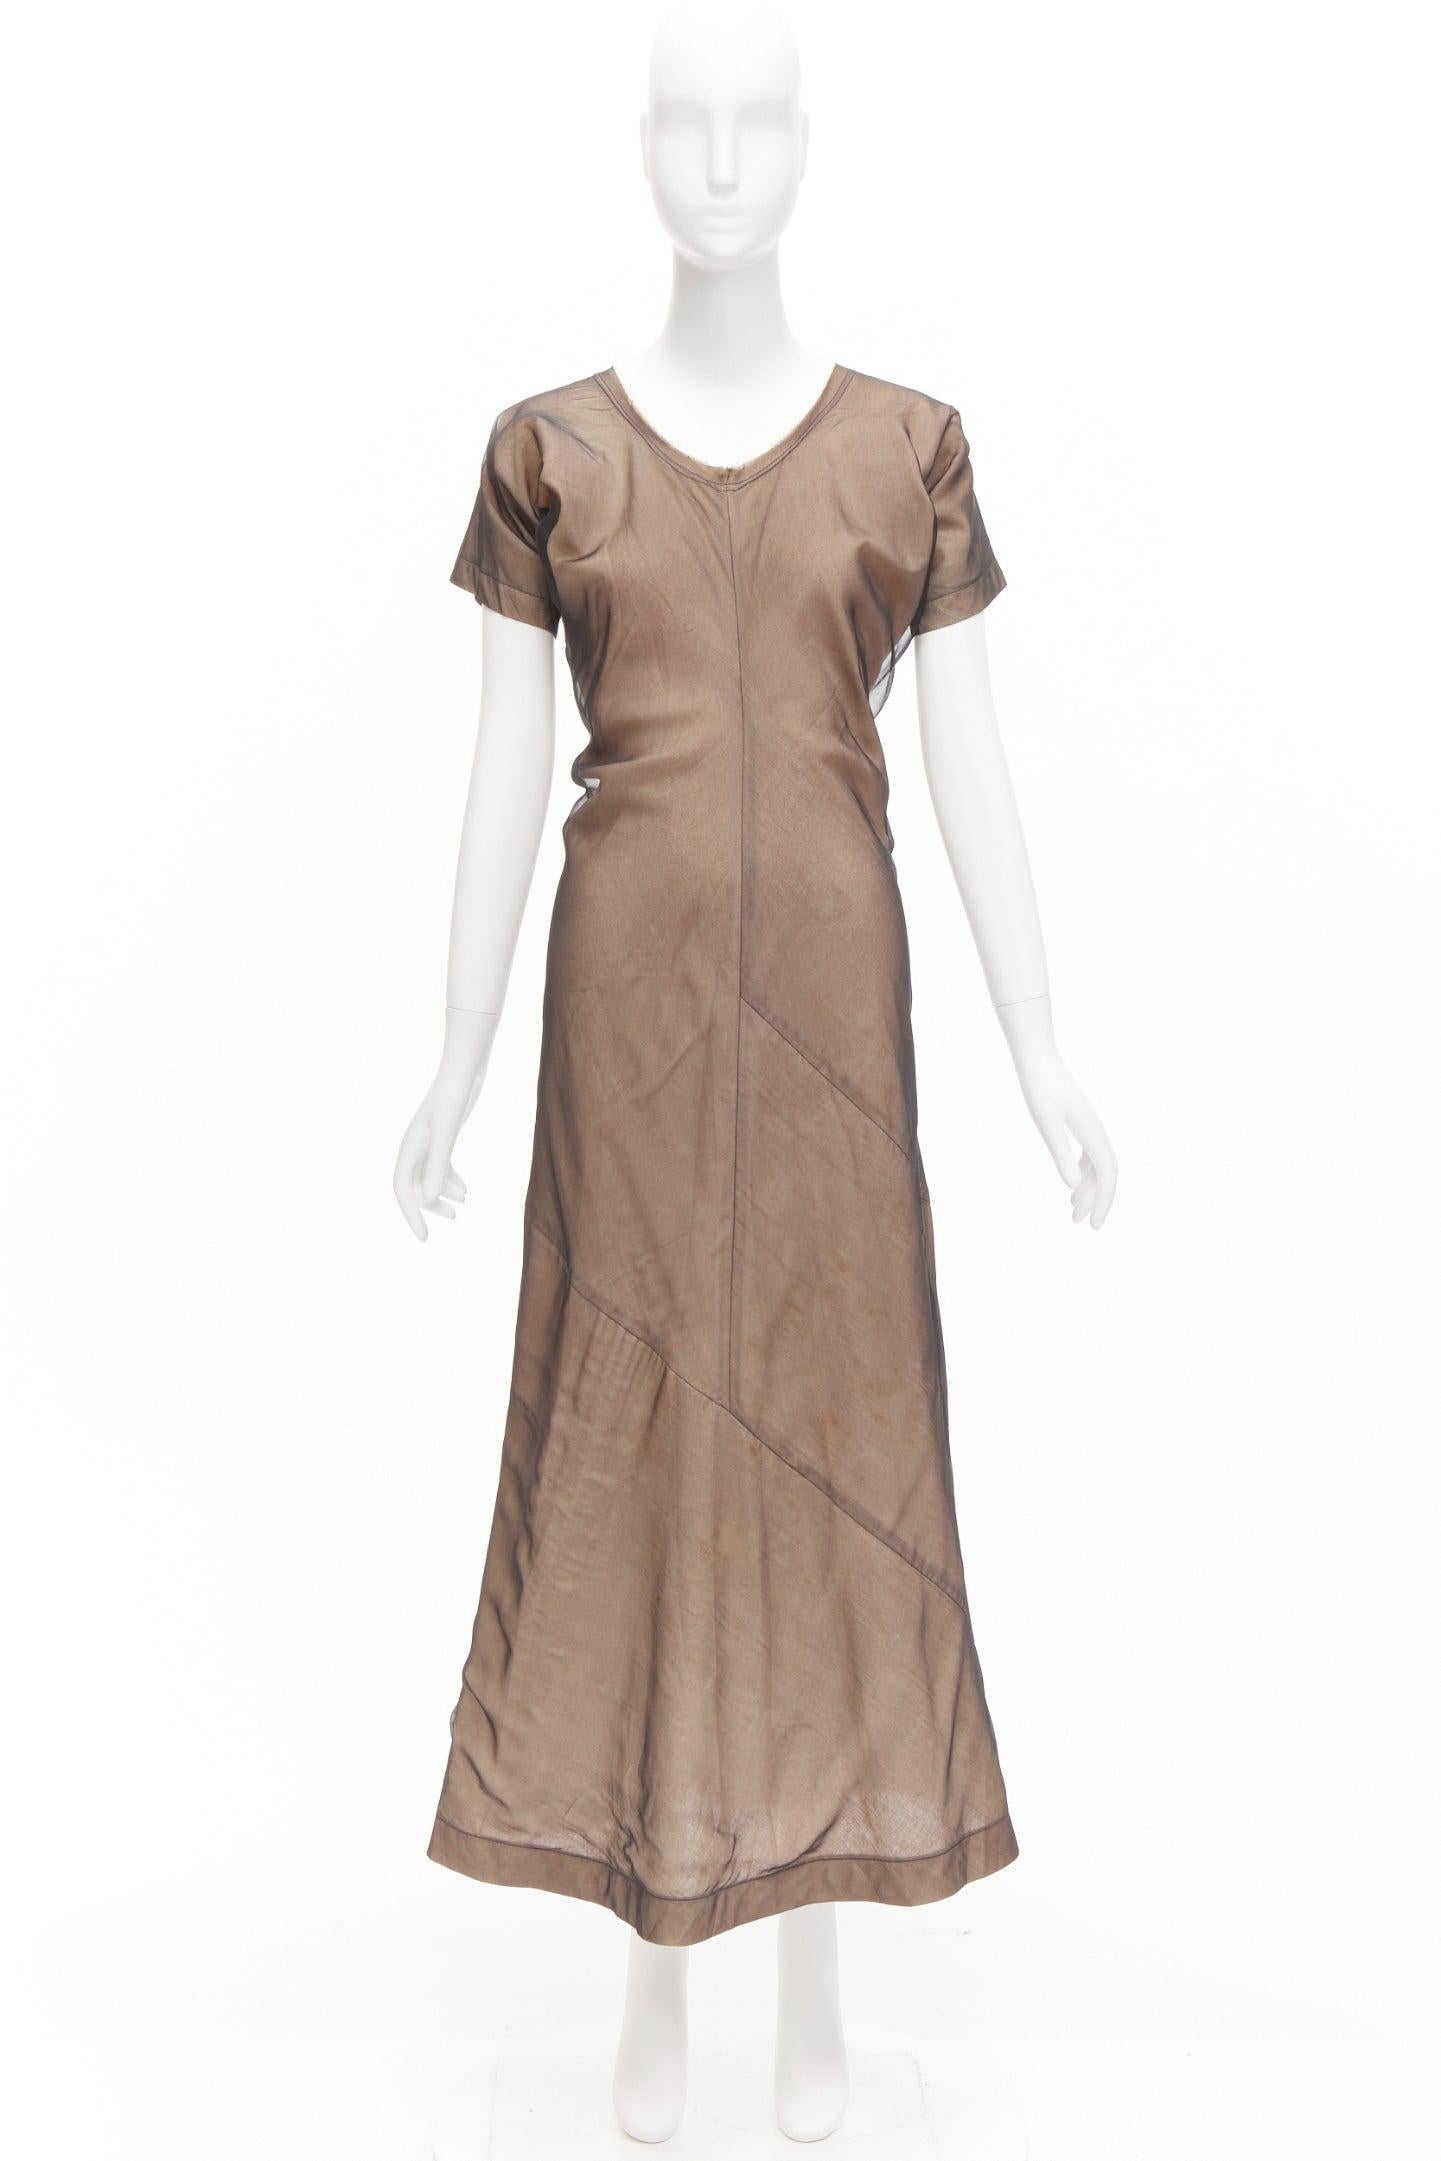 COMME DES GARCONS Vintage nude sheer overlay A-line bias dress S Cindy Sherman For Sale 6